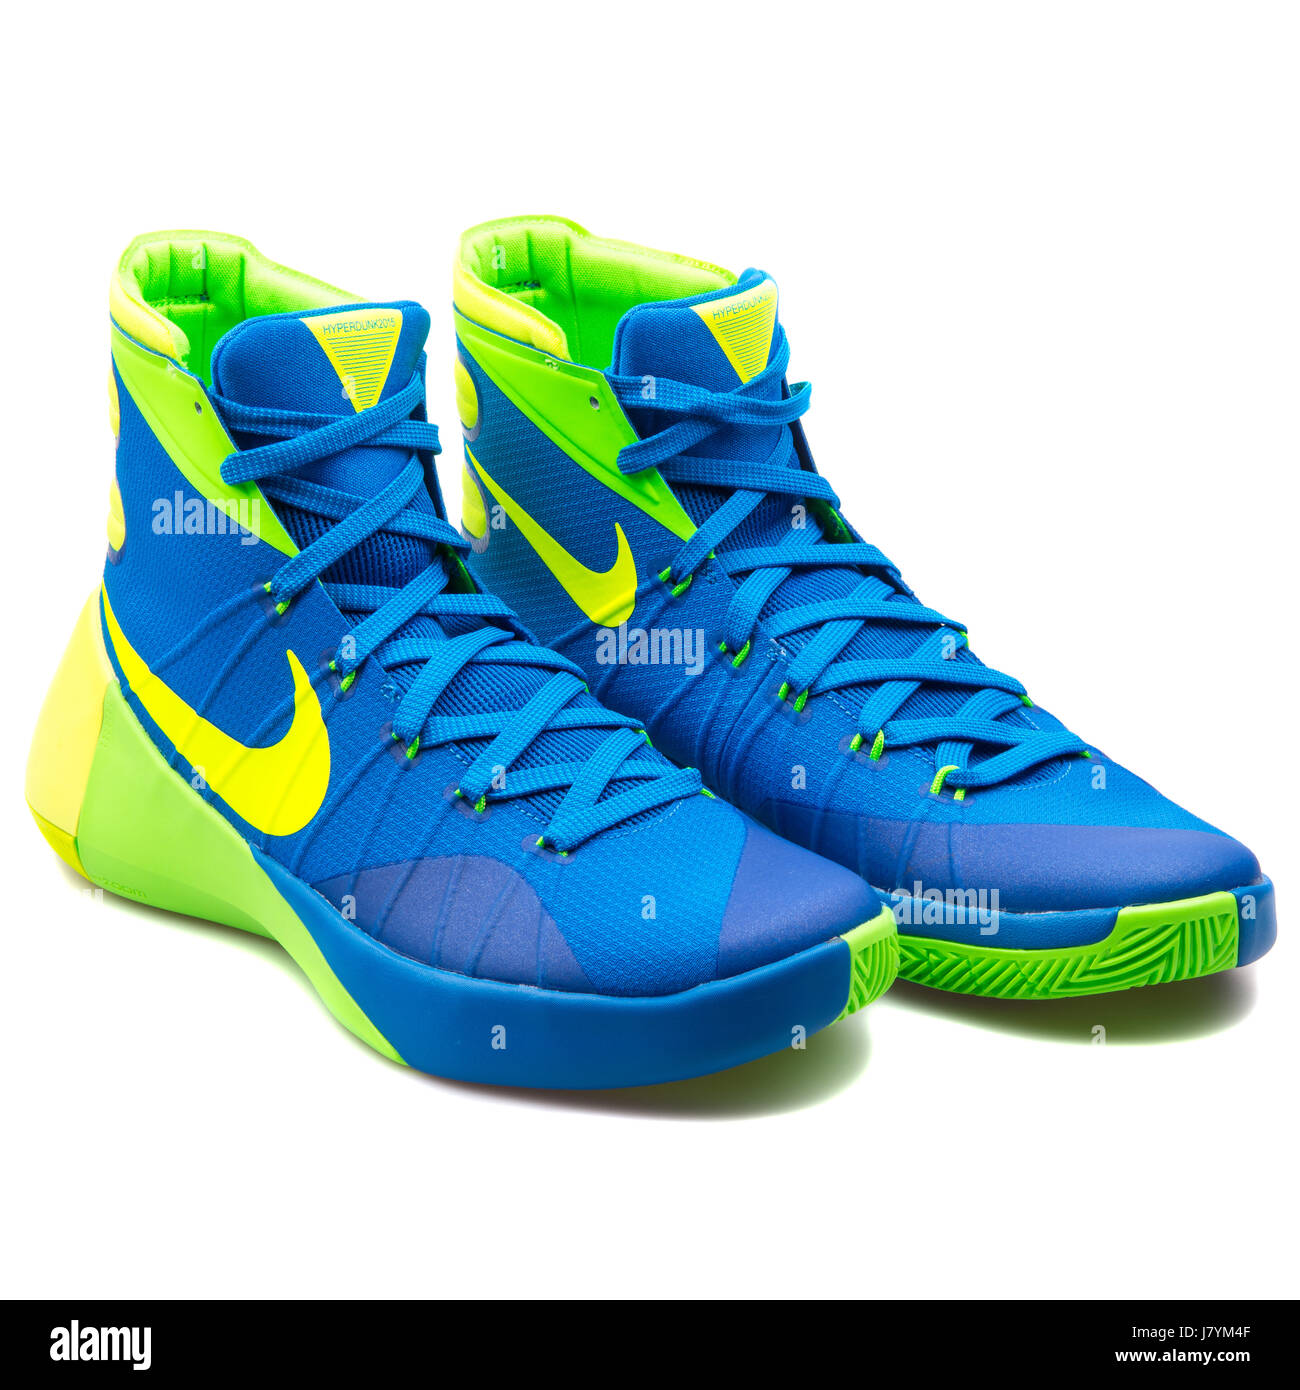 Nike Hyperdunk 2015 Herren blau gelb und grün Basketball Sneakers -  749561-473 Stockfotografie - Alamy